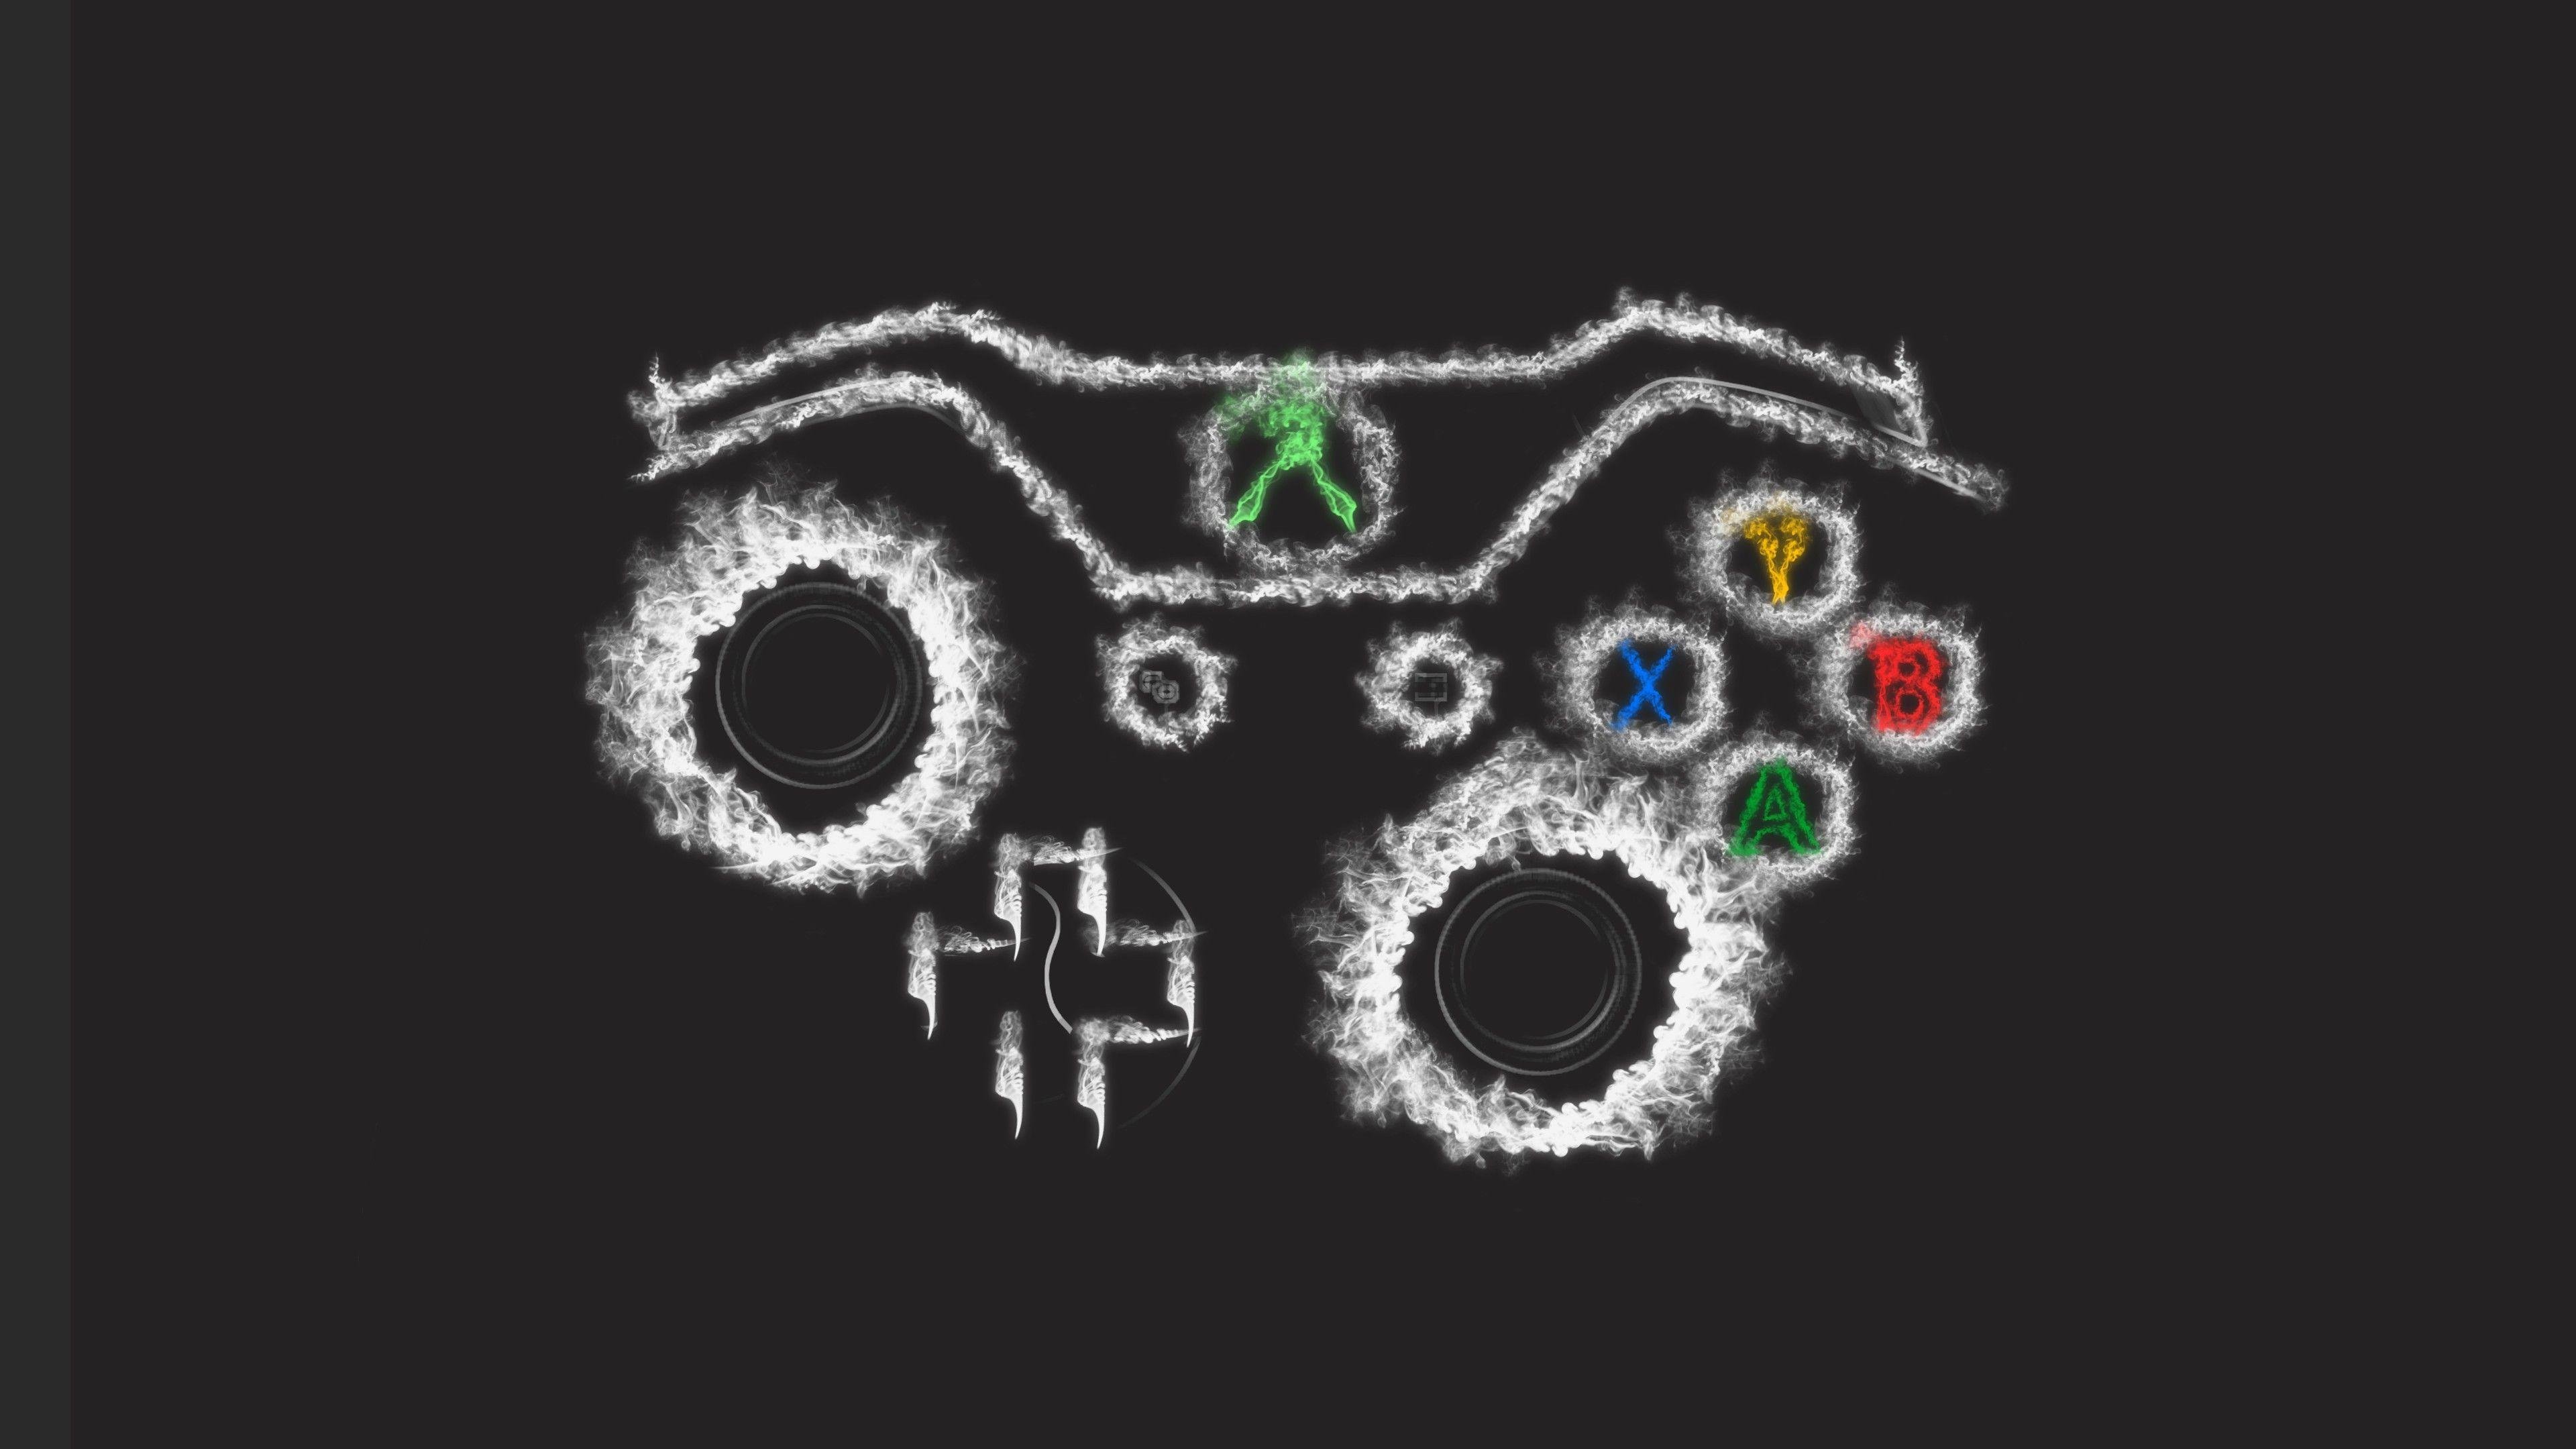 Xbox Controller Art, HD Computer, 4k Wallpaper, Image, Background